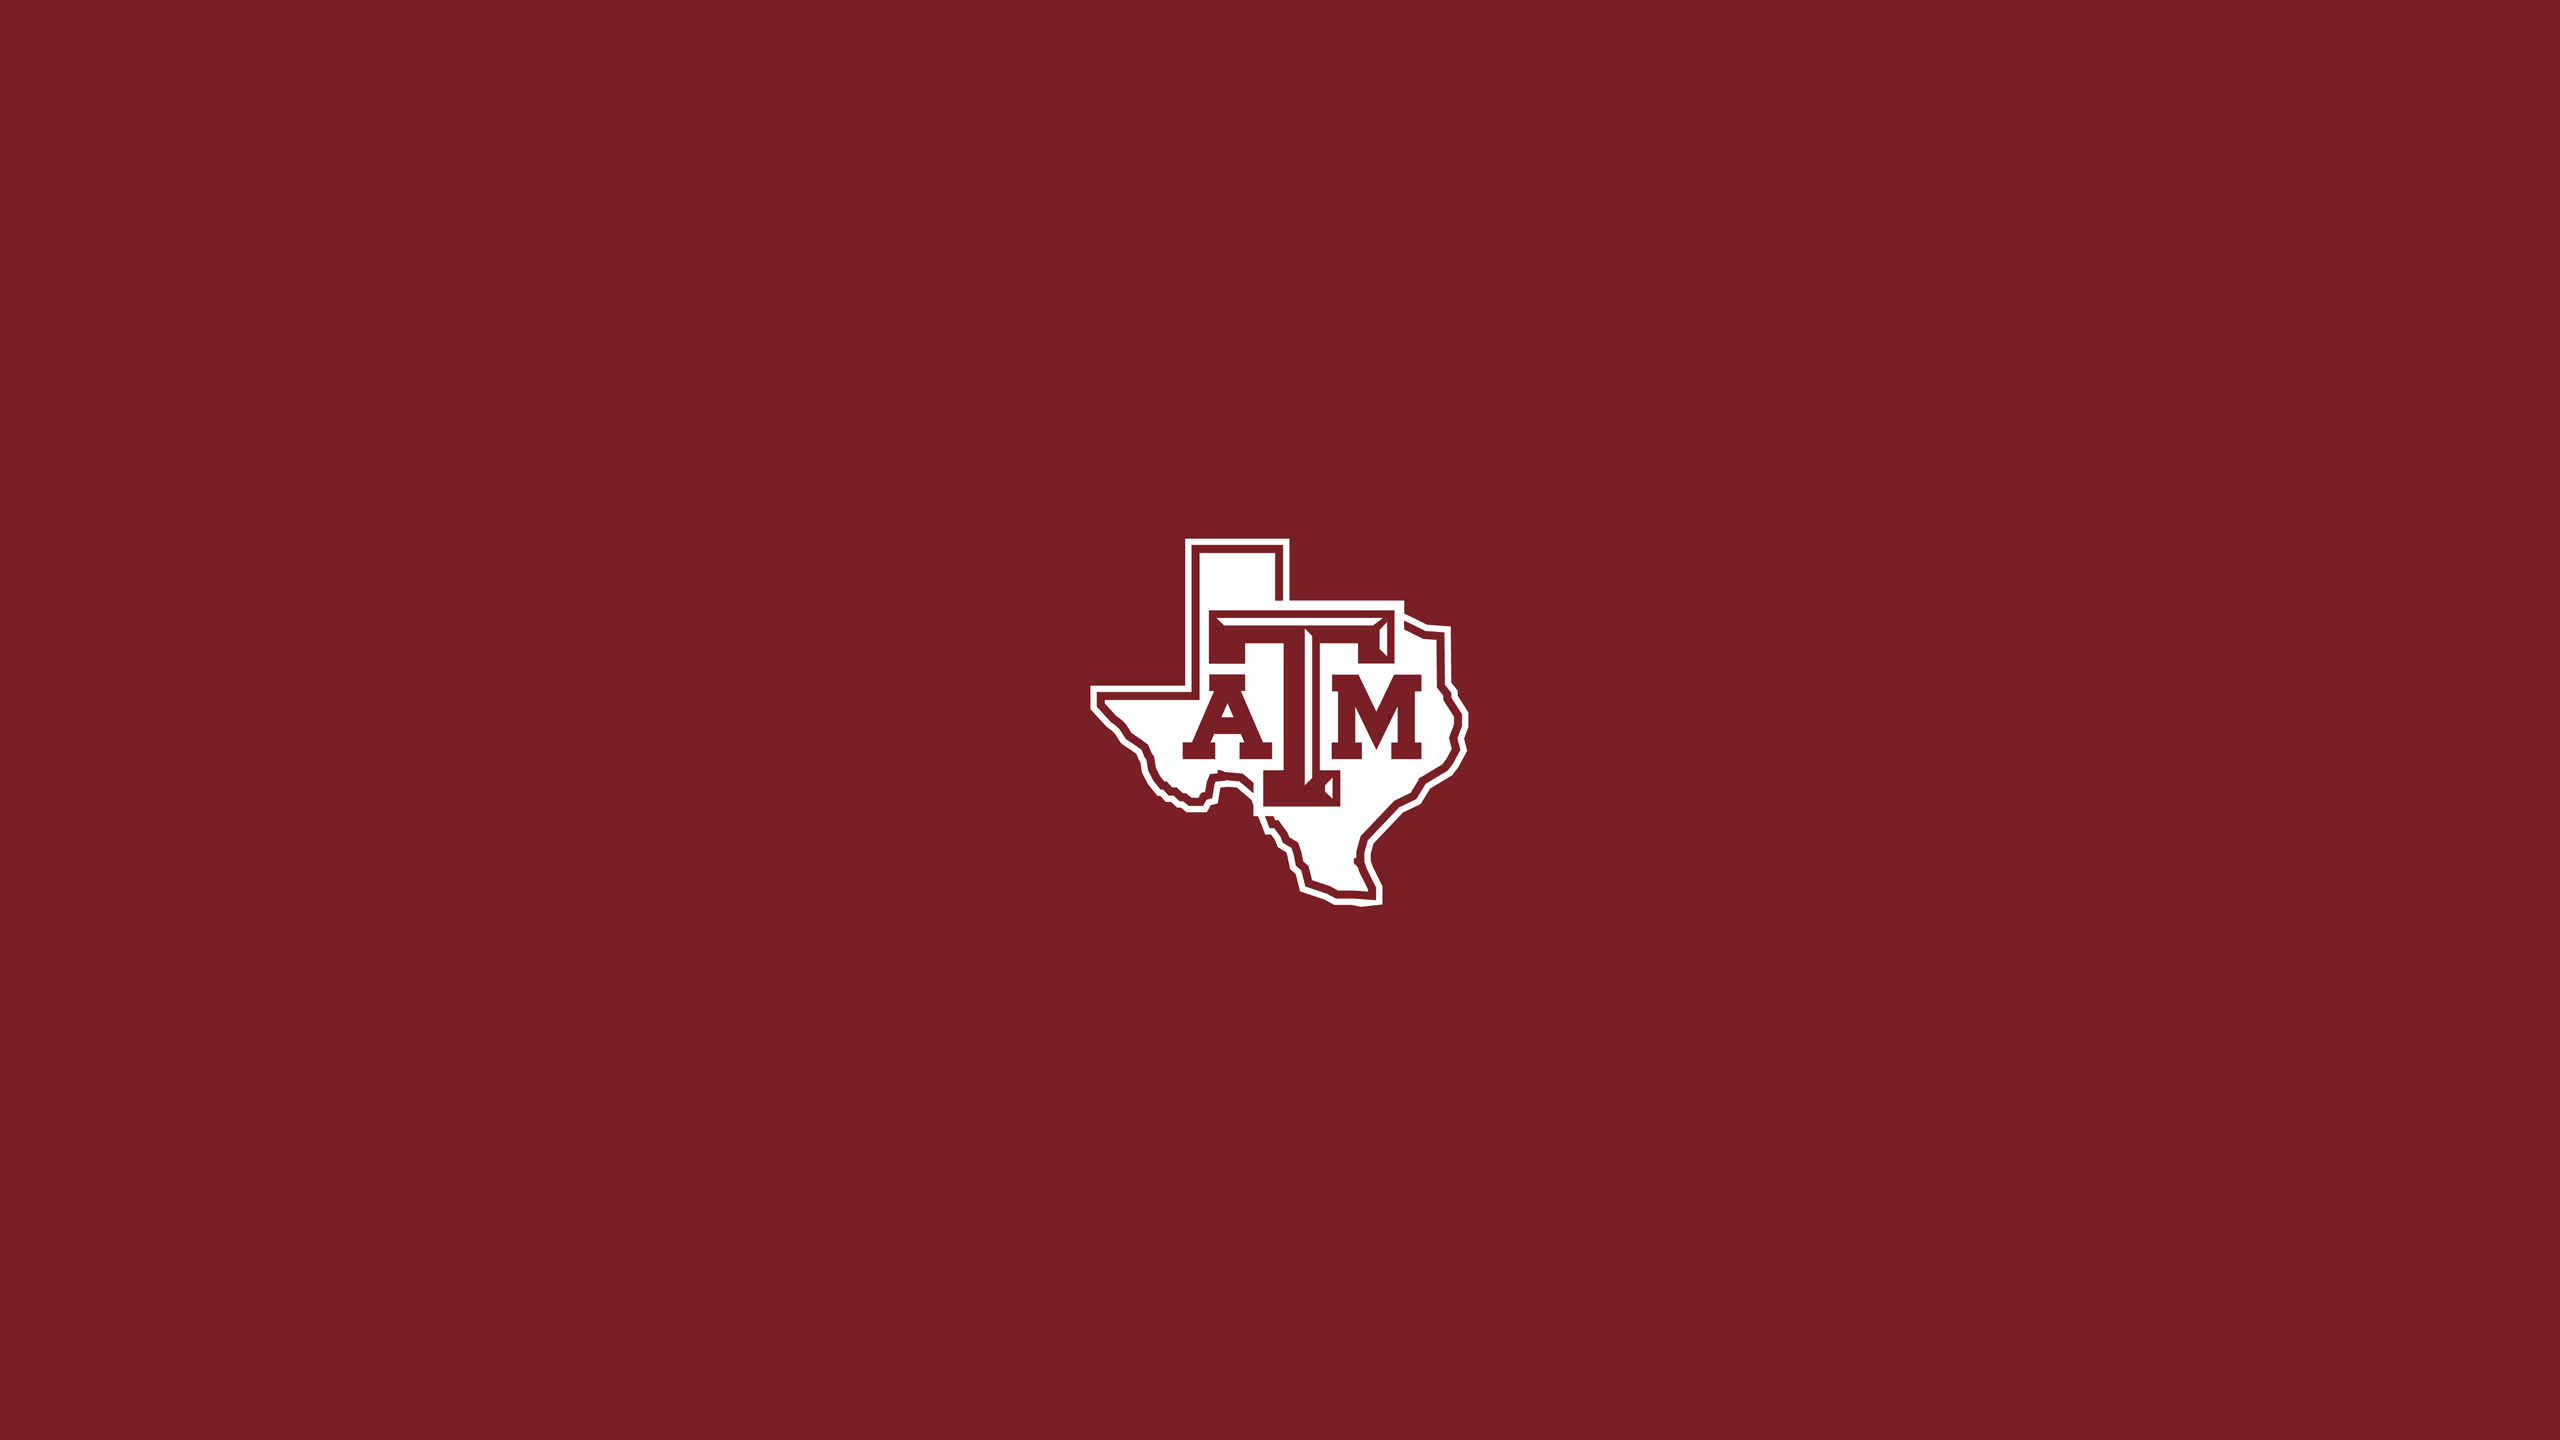 Texas A&M Aggies Football - NCAAF - Square Bettor